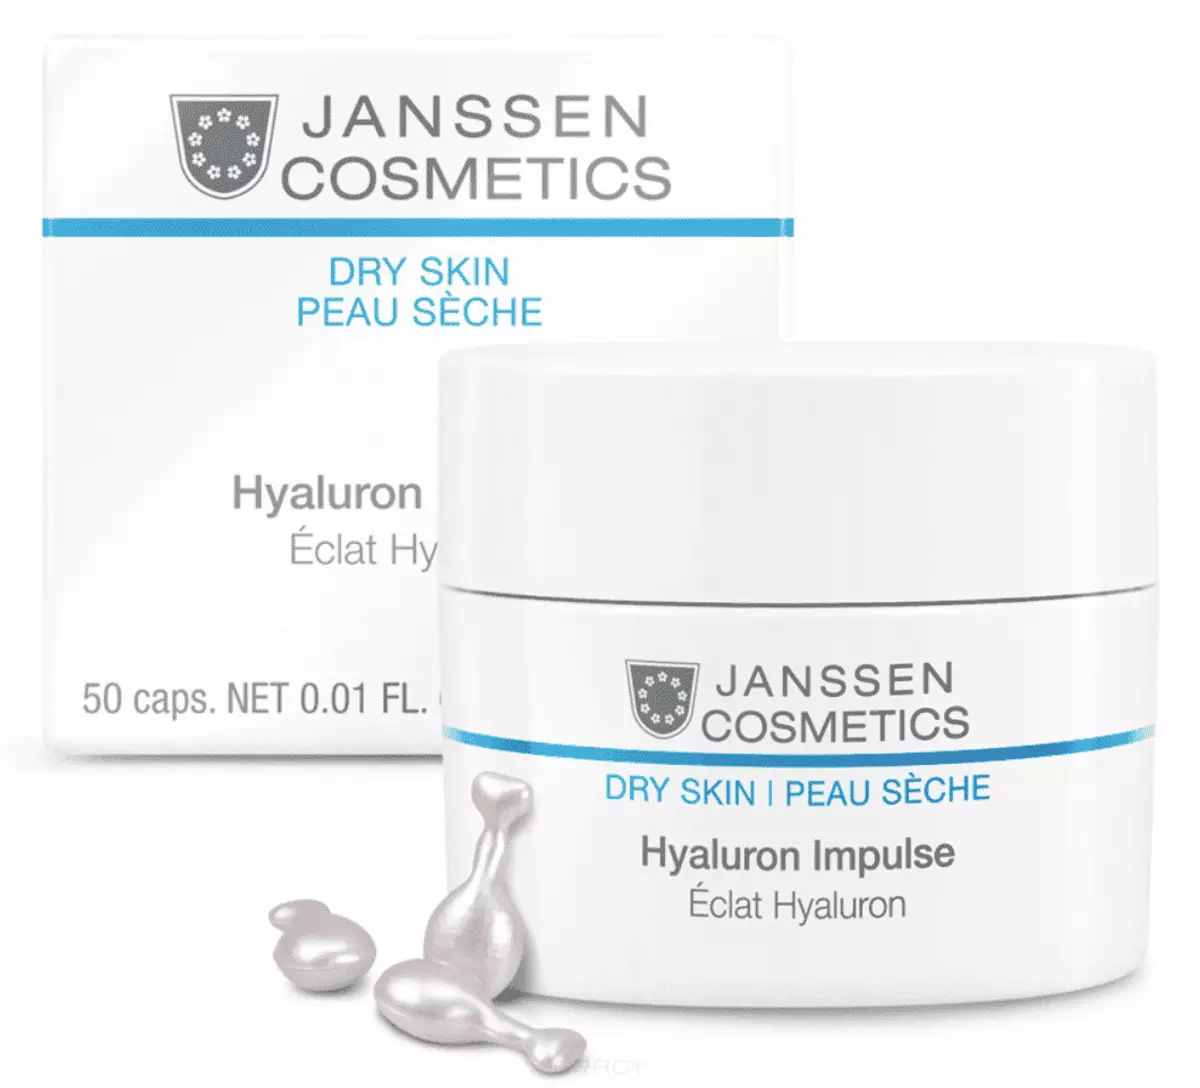 Janssen cosmetics cosmetics (28 photos): Overview of German Professional Associal Asset Cosmetics, cosmetologist ongororo 4862_24